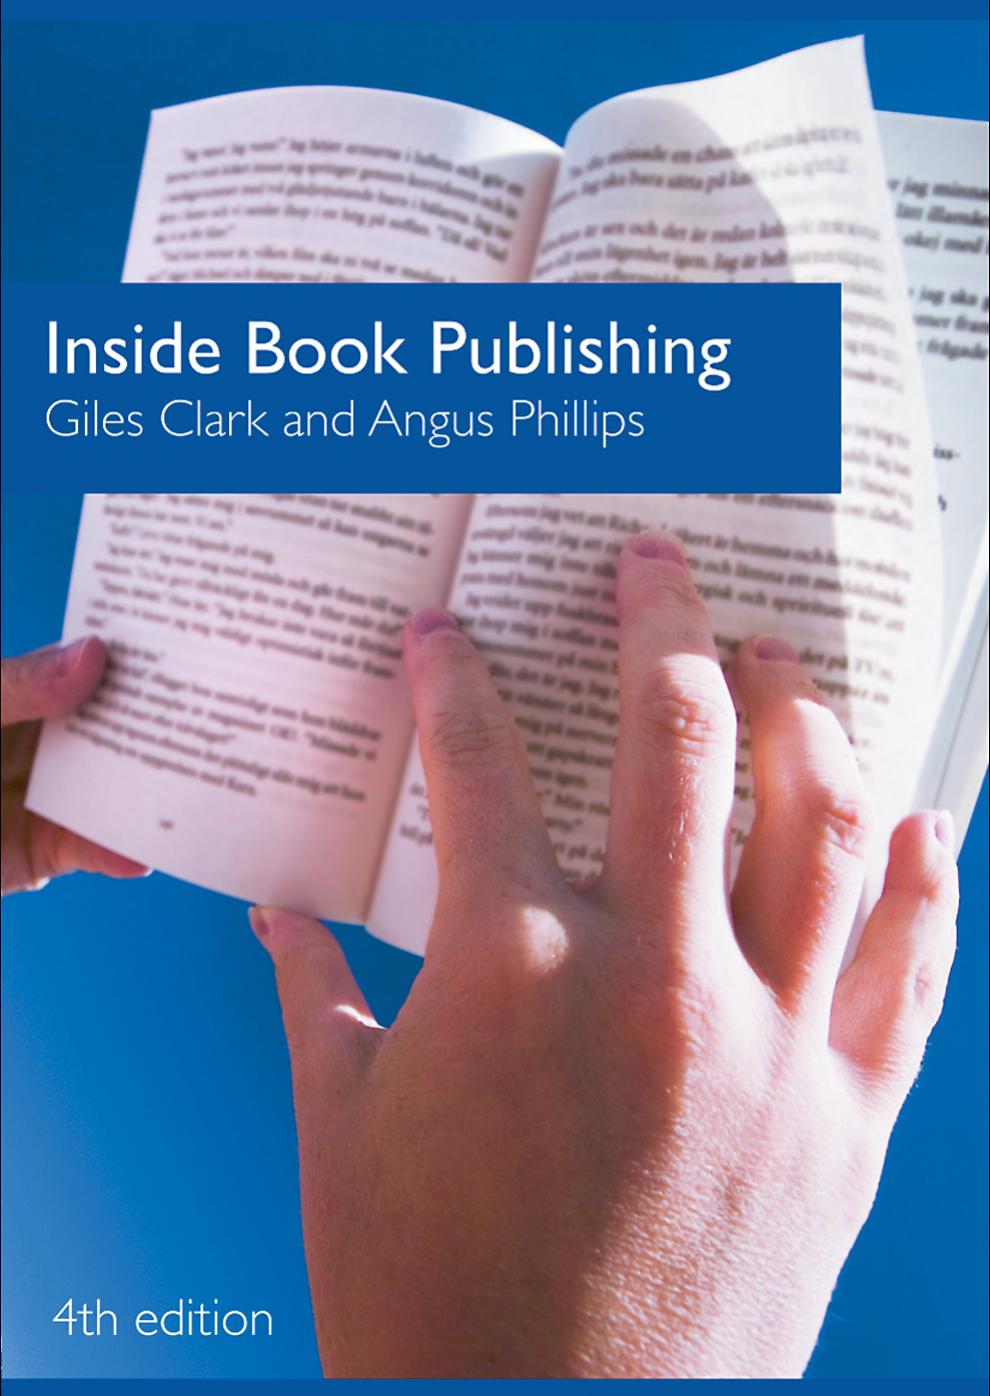 Inside Book Publishing, Fourth edition